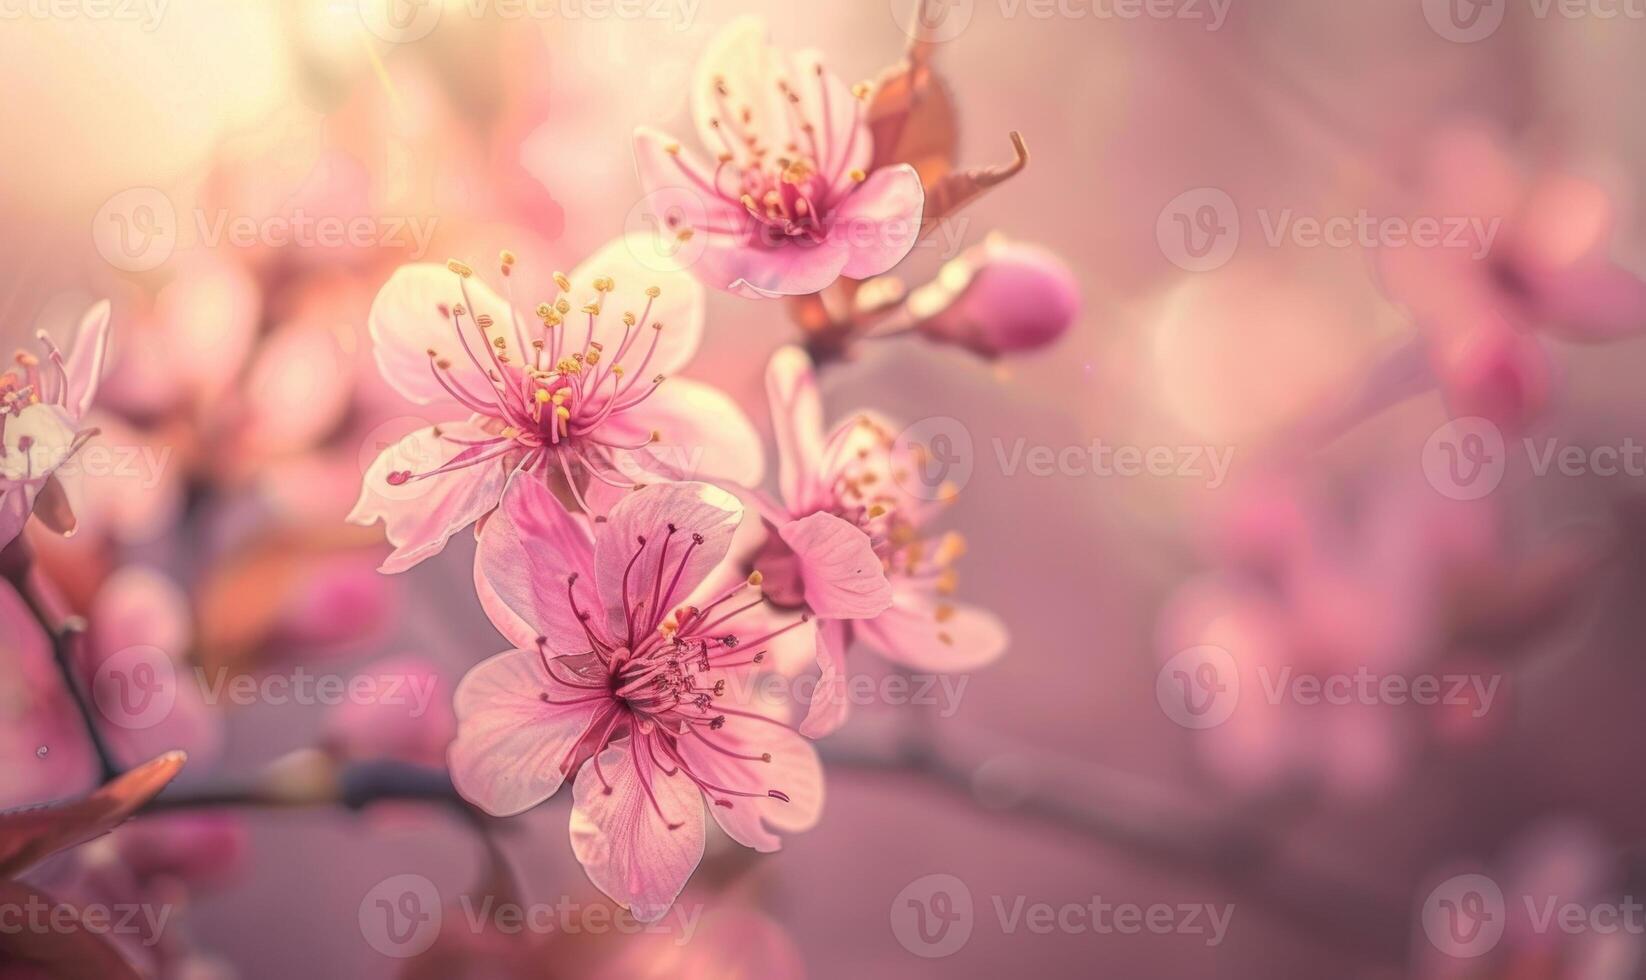 floreciente Cereza florecer árbol, de cerca vista, selectivo enfocar, bokeh foto